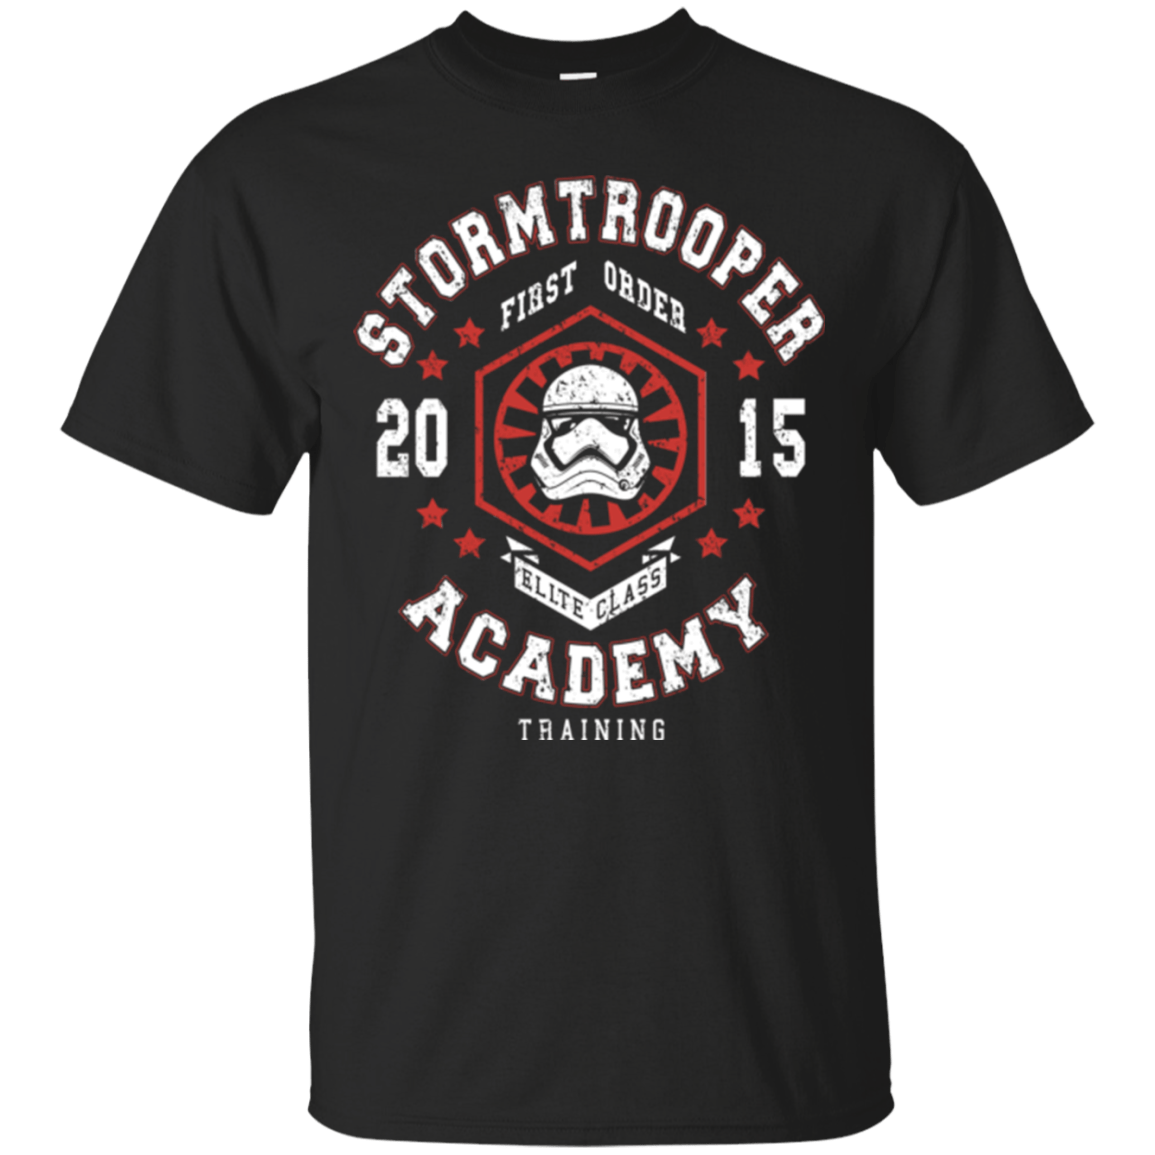 T-Shirts Black / Small Stormtrooper Academy 15 T-Shirt